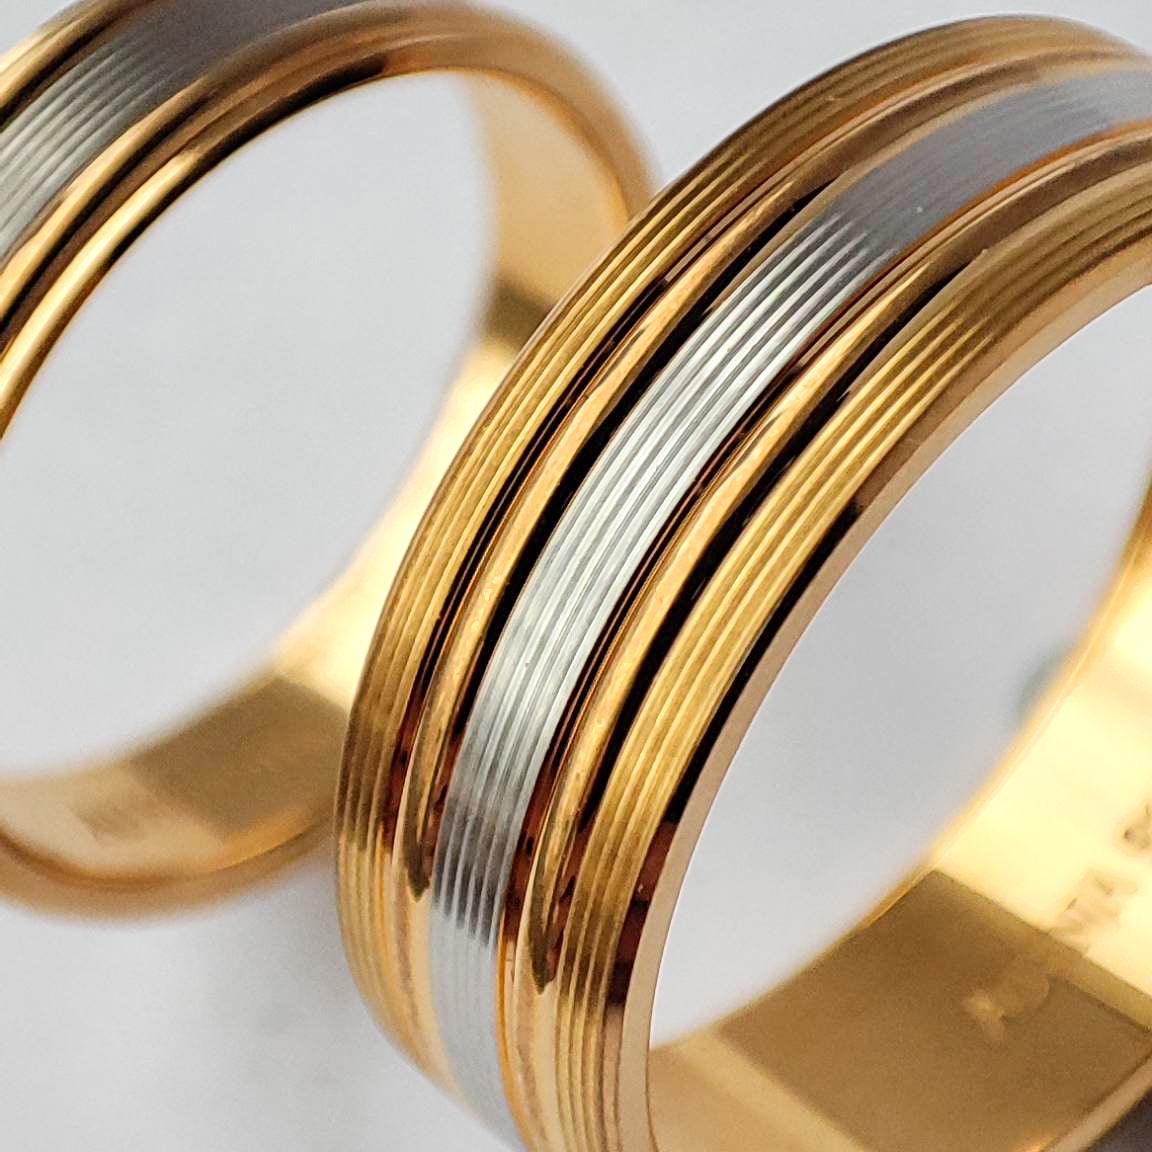 22ct Gold Wedding Band with Diamond Cut and Rhodium Finish LR/GR-8225 - Minar Jewellers